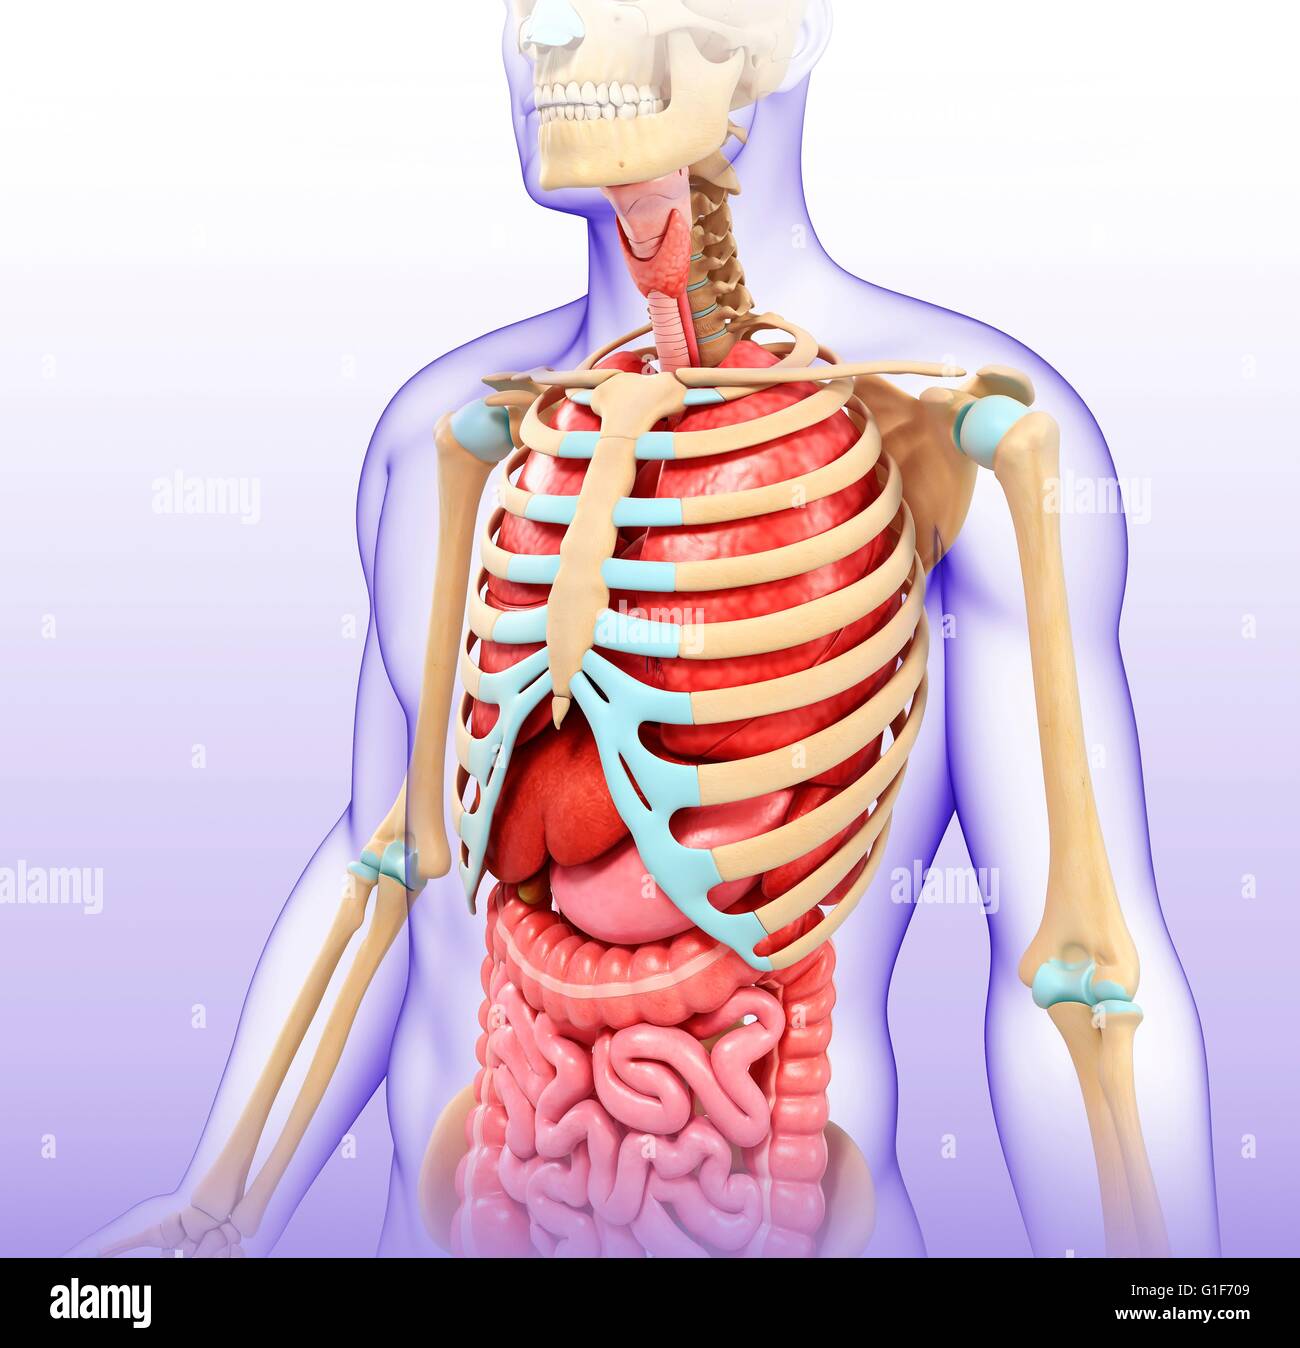 Chest anatomy, artwork Stock Photo - Alamy